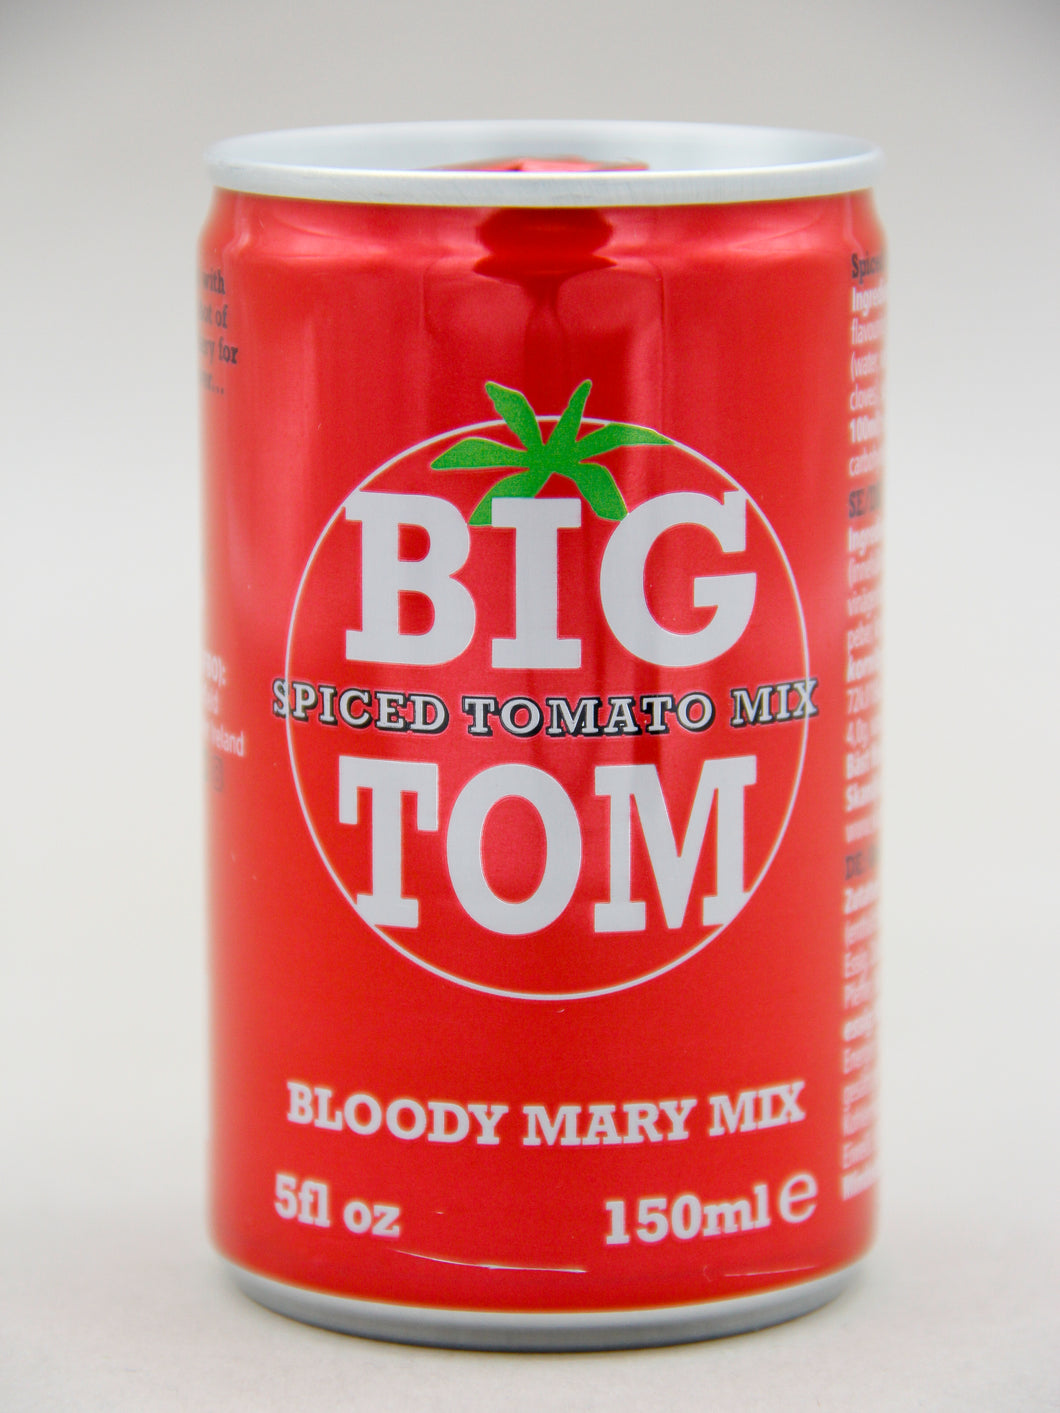 Big Tom, Spiced Tomato Mix, United Kingdom (0%, 15cl)